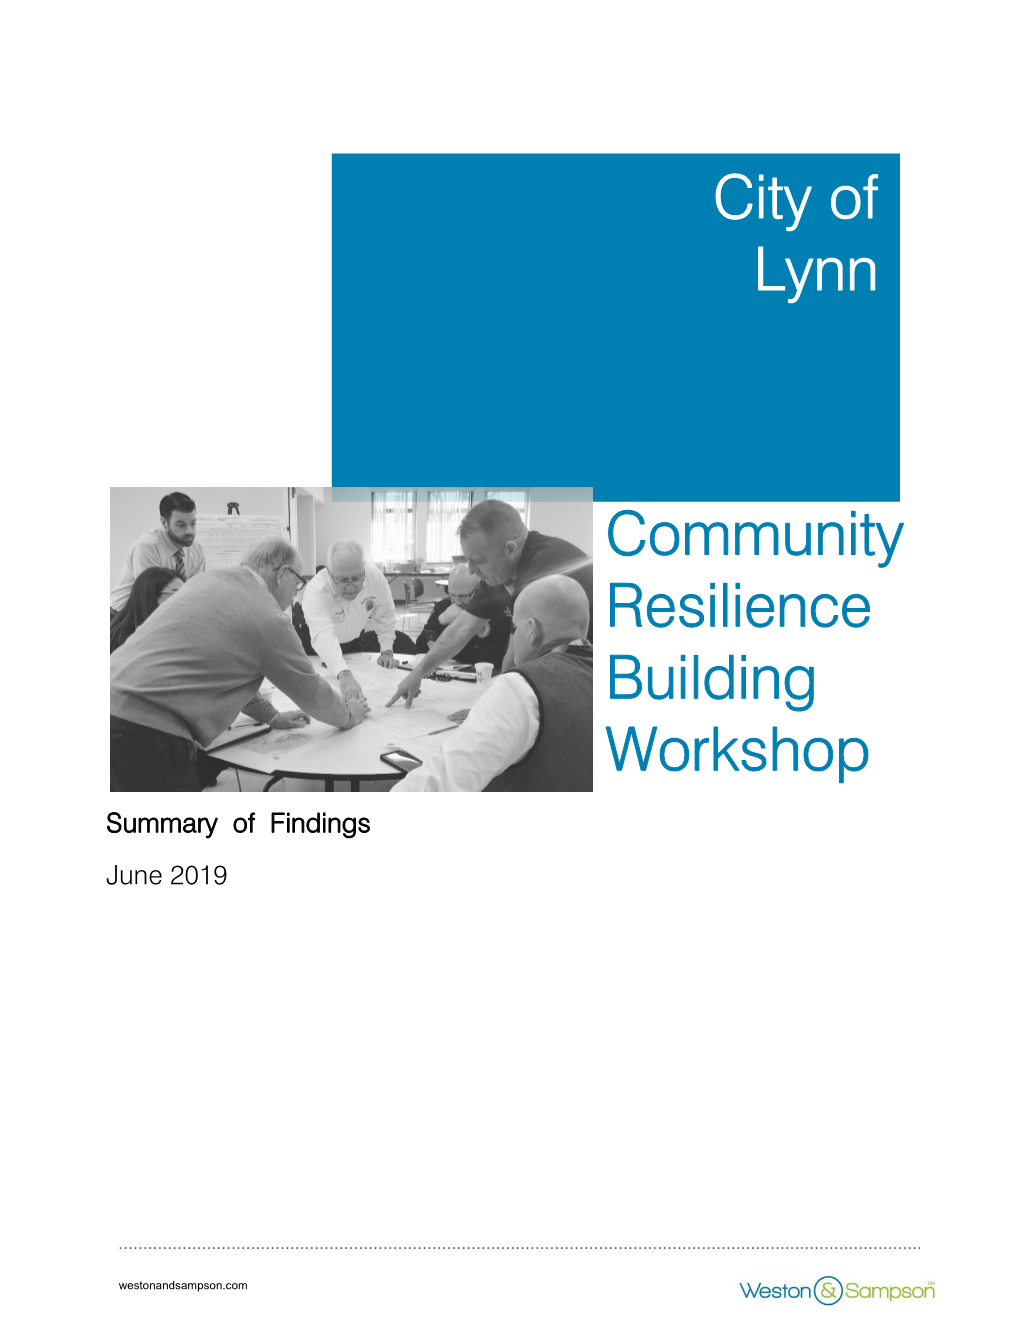 Community Resilience Building Workshop